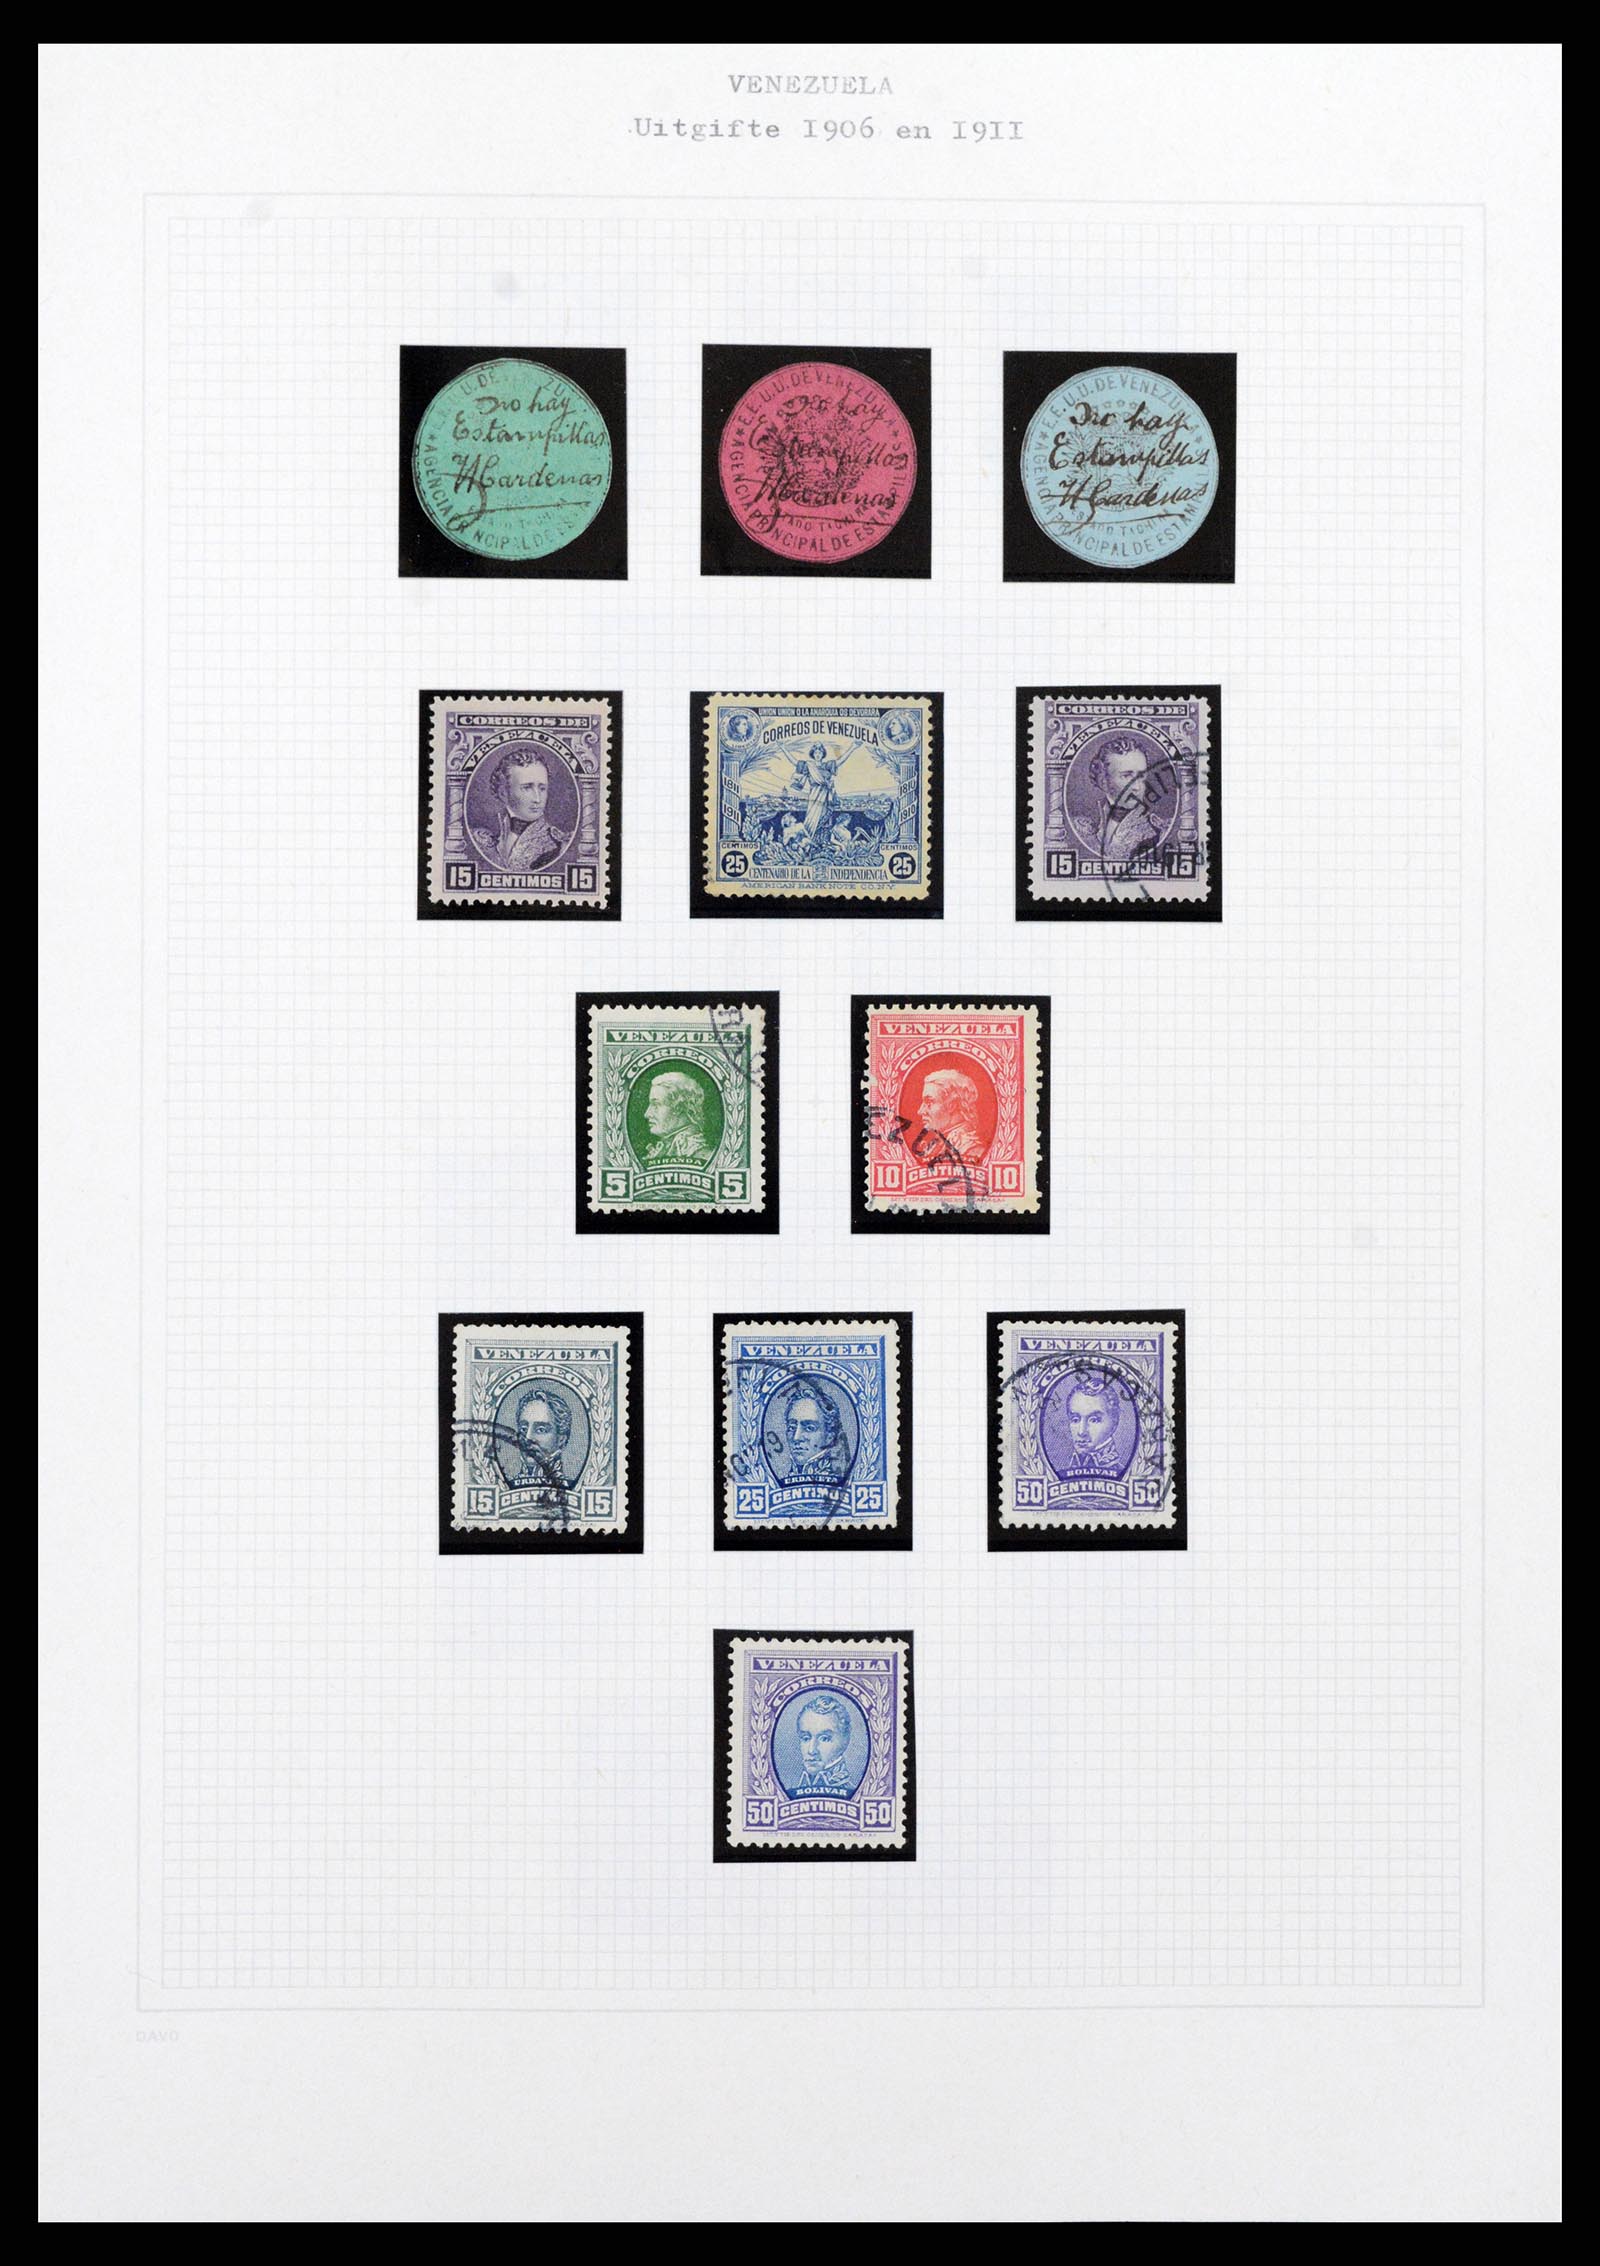 37353 008 - Stamp collection 37353 Venezuela 1880-1960.